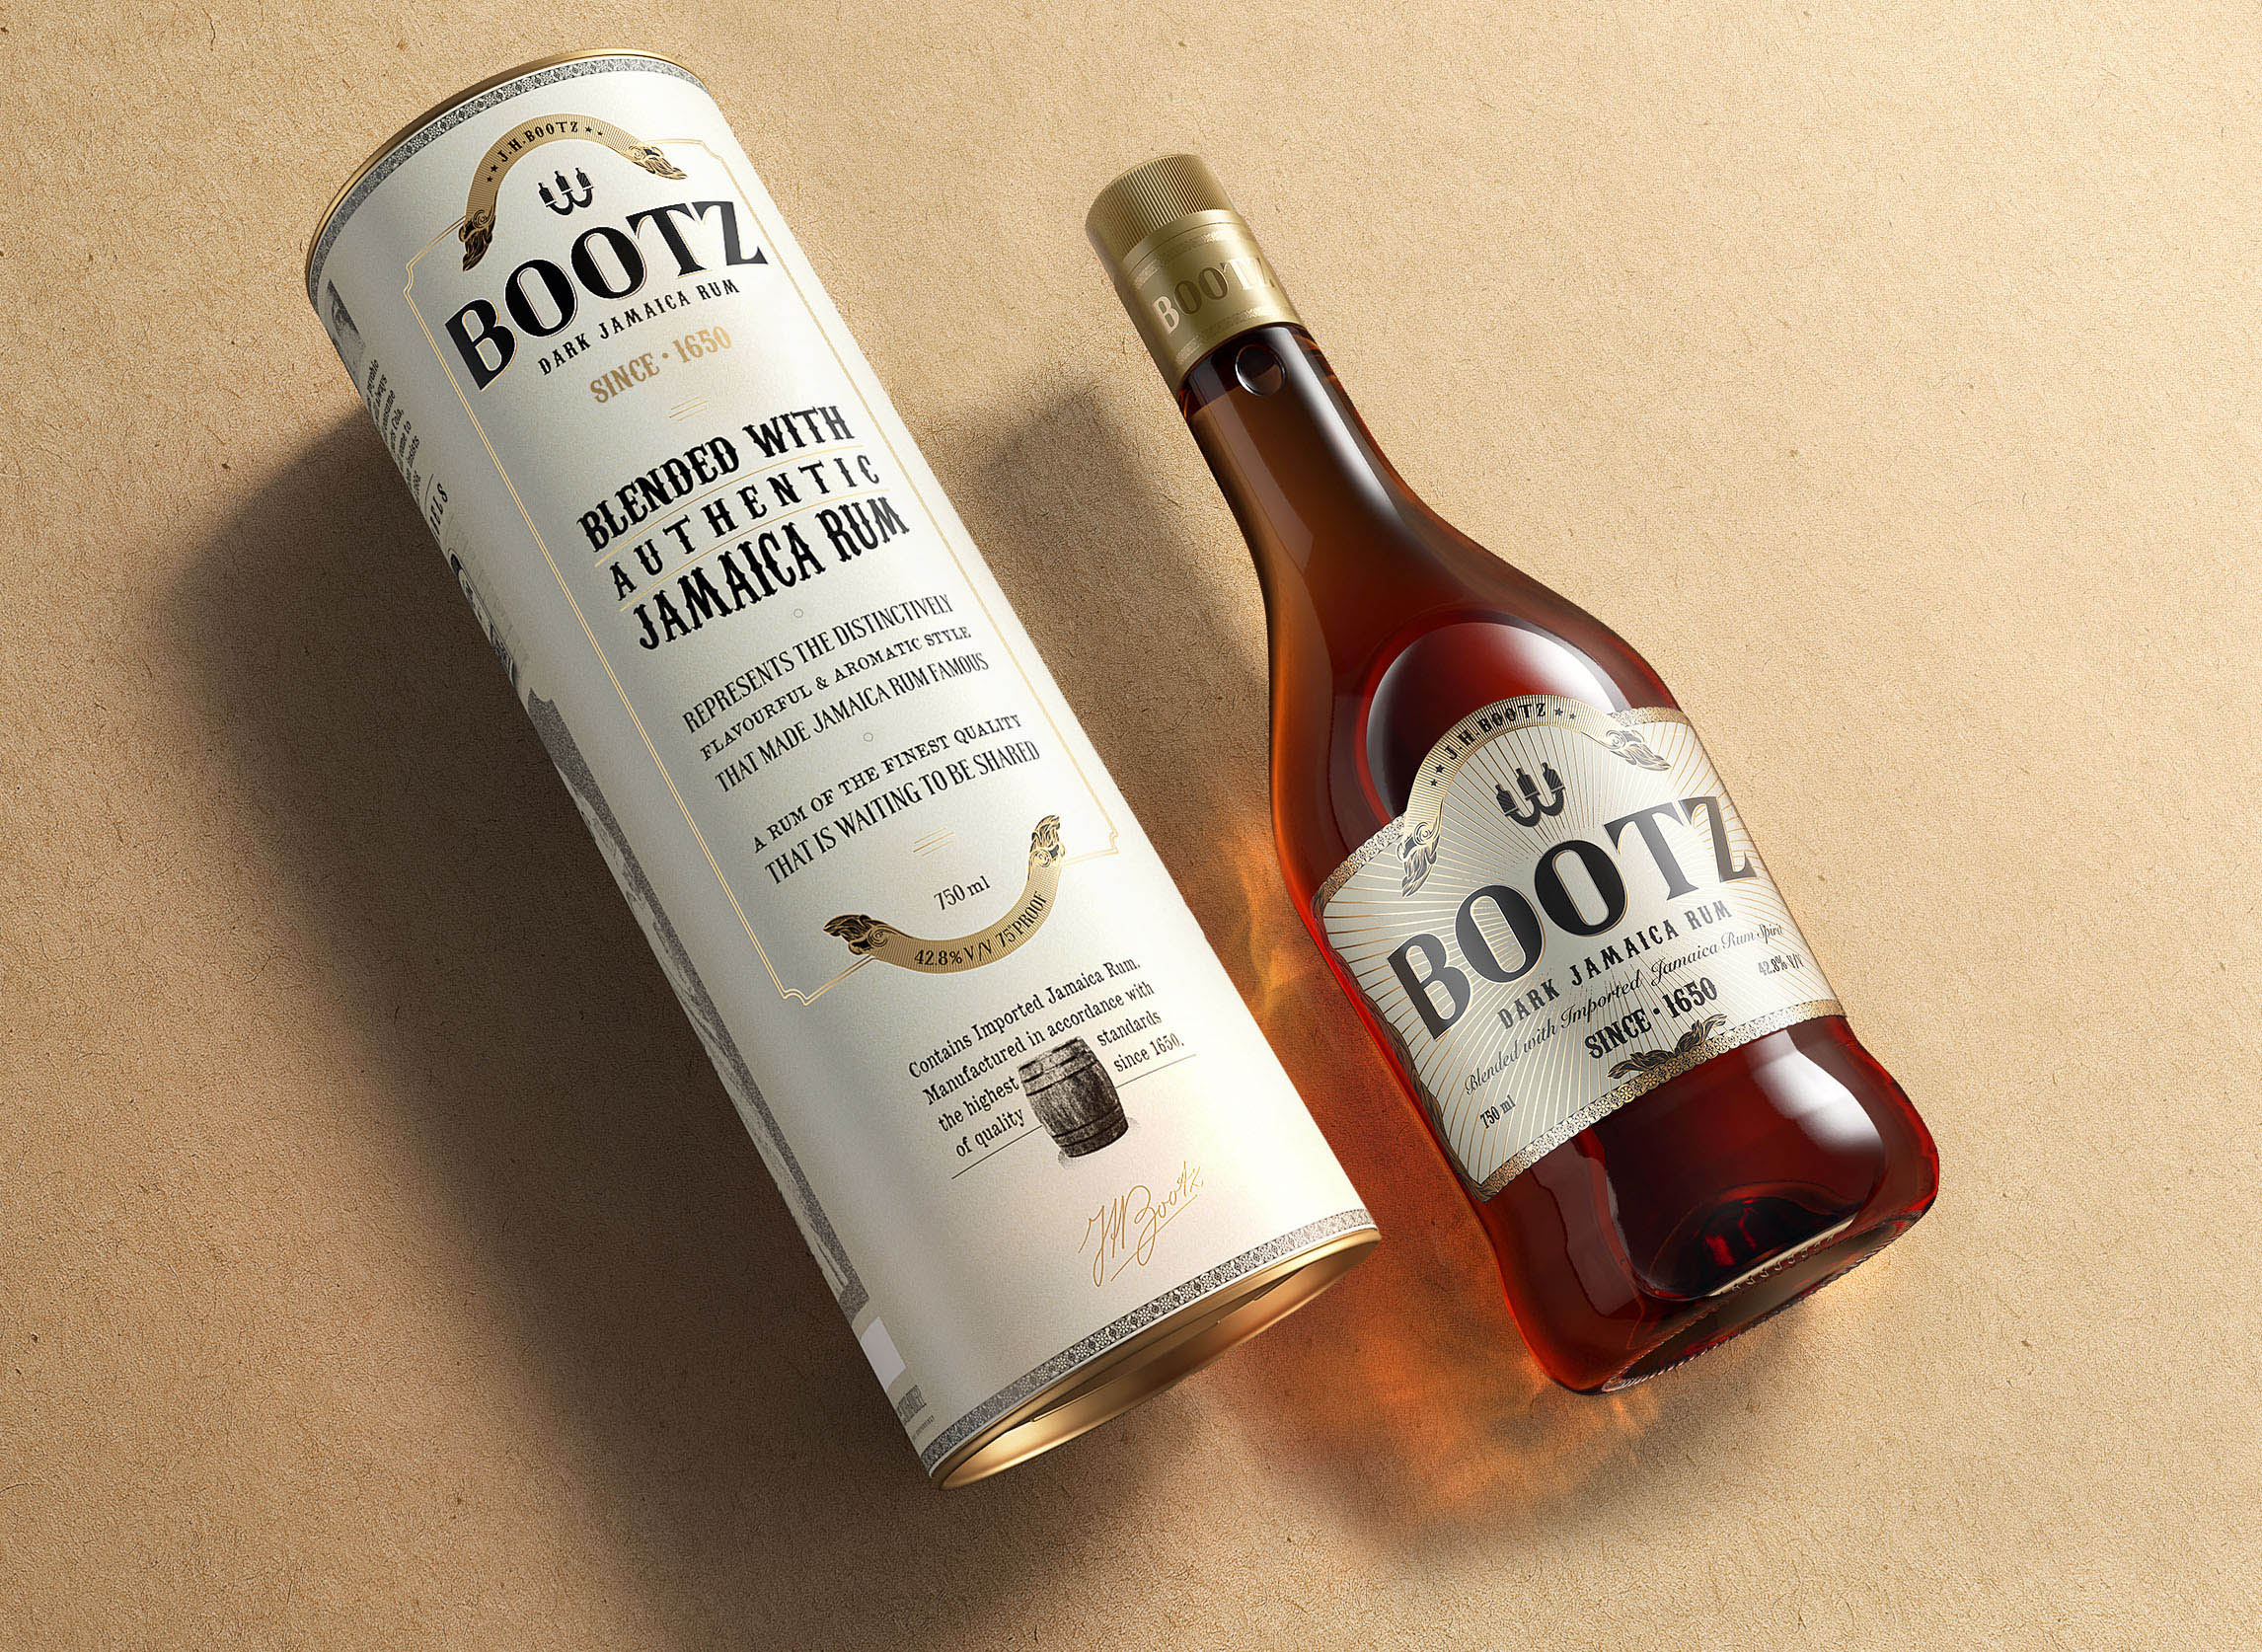 Repositioning via packaging design in the Indian Market (Bootz Dark Jamaica Rum)